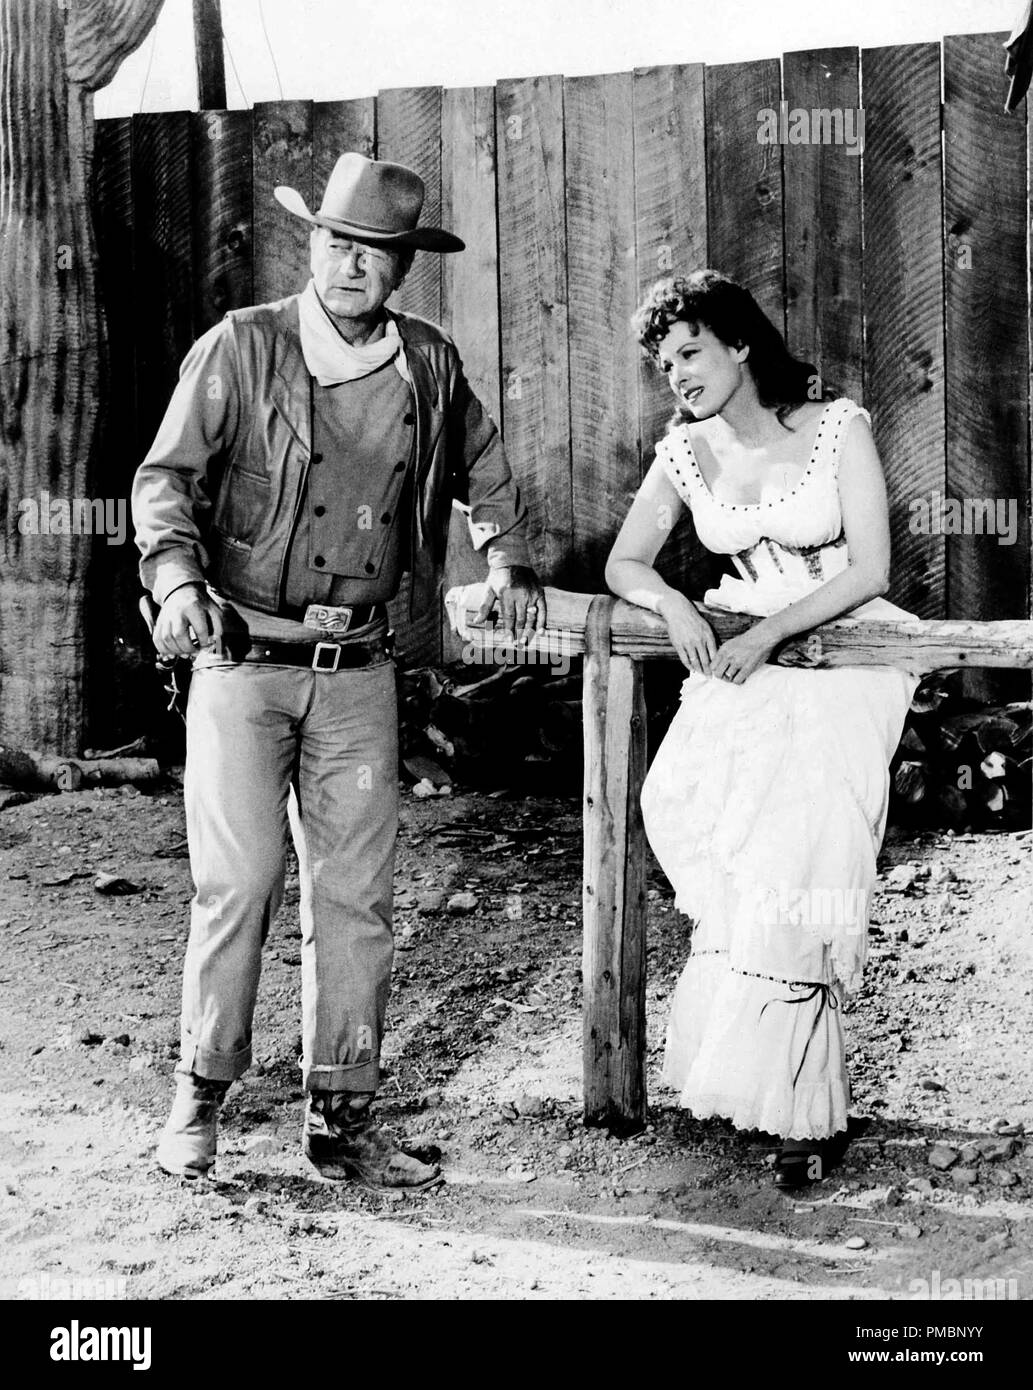 Maureen O'Hara and John Wayne in a still from the film 